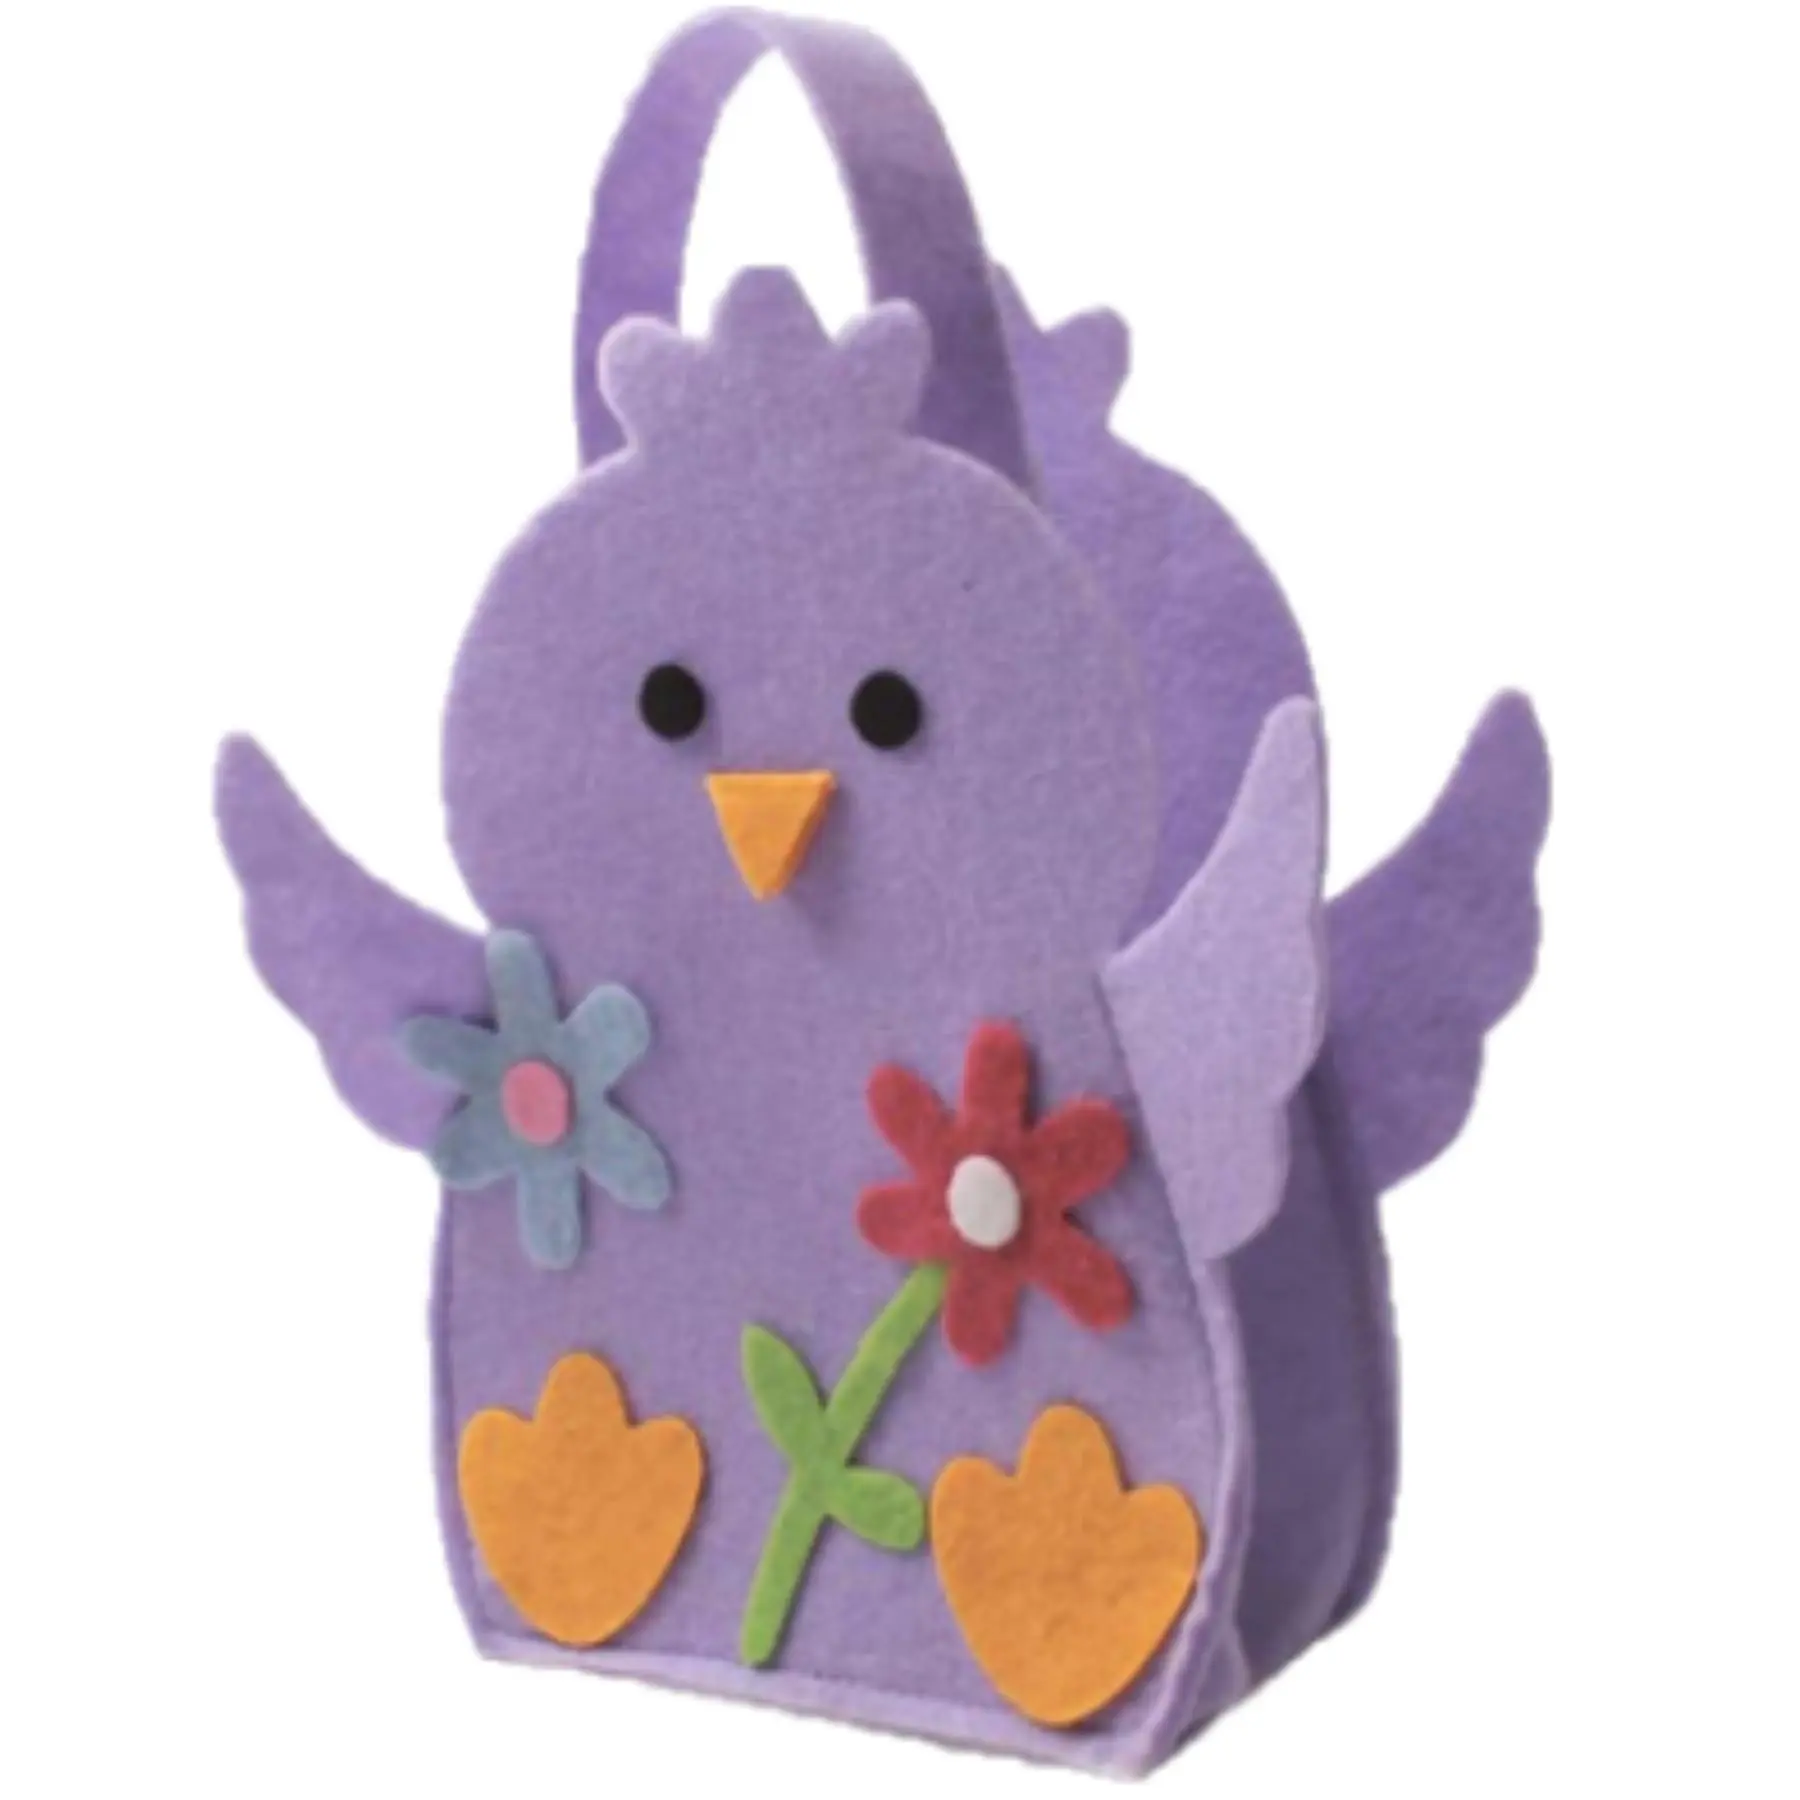 Easter Baskets, Buckets, Accessories - Felt Chick Bag - Purple